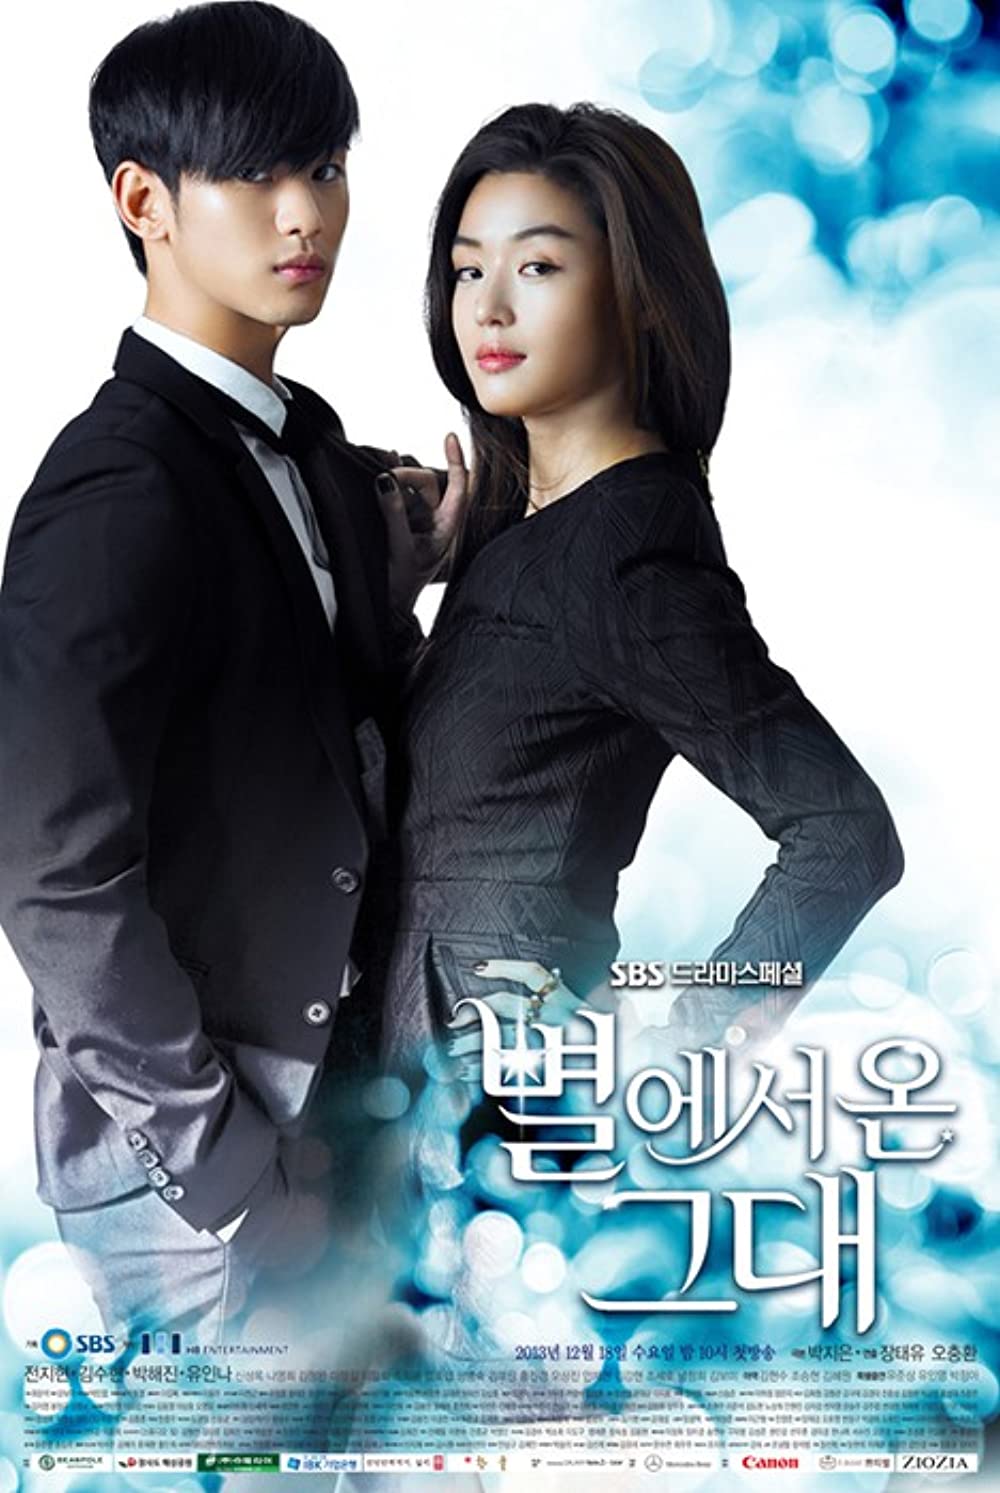 Penuh kisah fantasi, ini 11 drama Korea romantis terbaik di IMDb